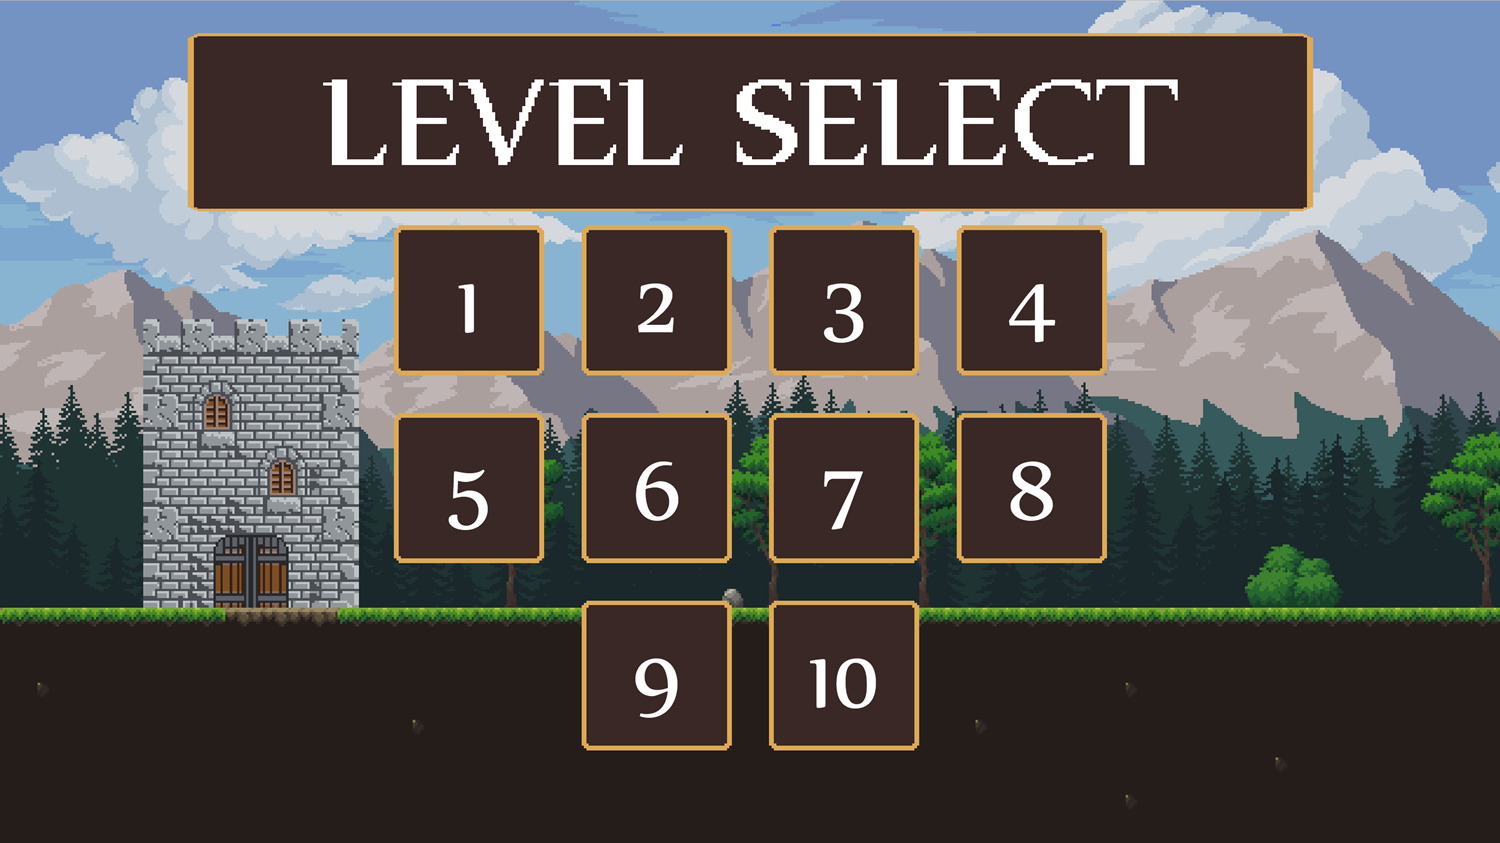 Defense of the Kingdom Game Level Select Screen Screenshot.